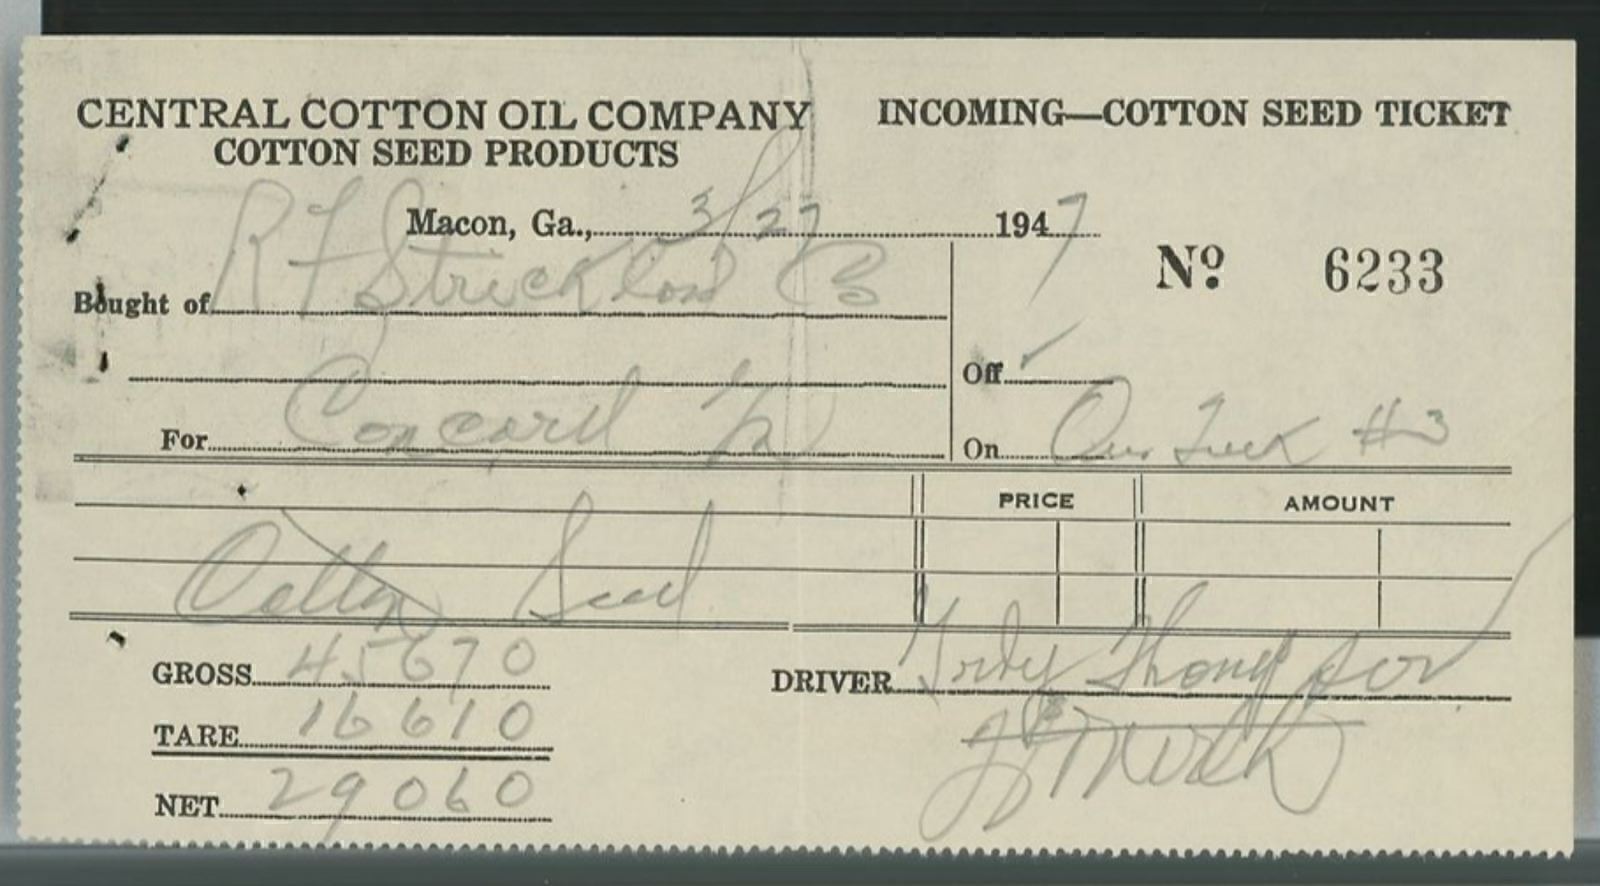 1947 Central Cotton Oil Company Macon Georgia Cotton Seed Ticket 387